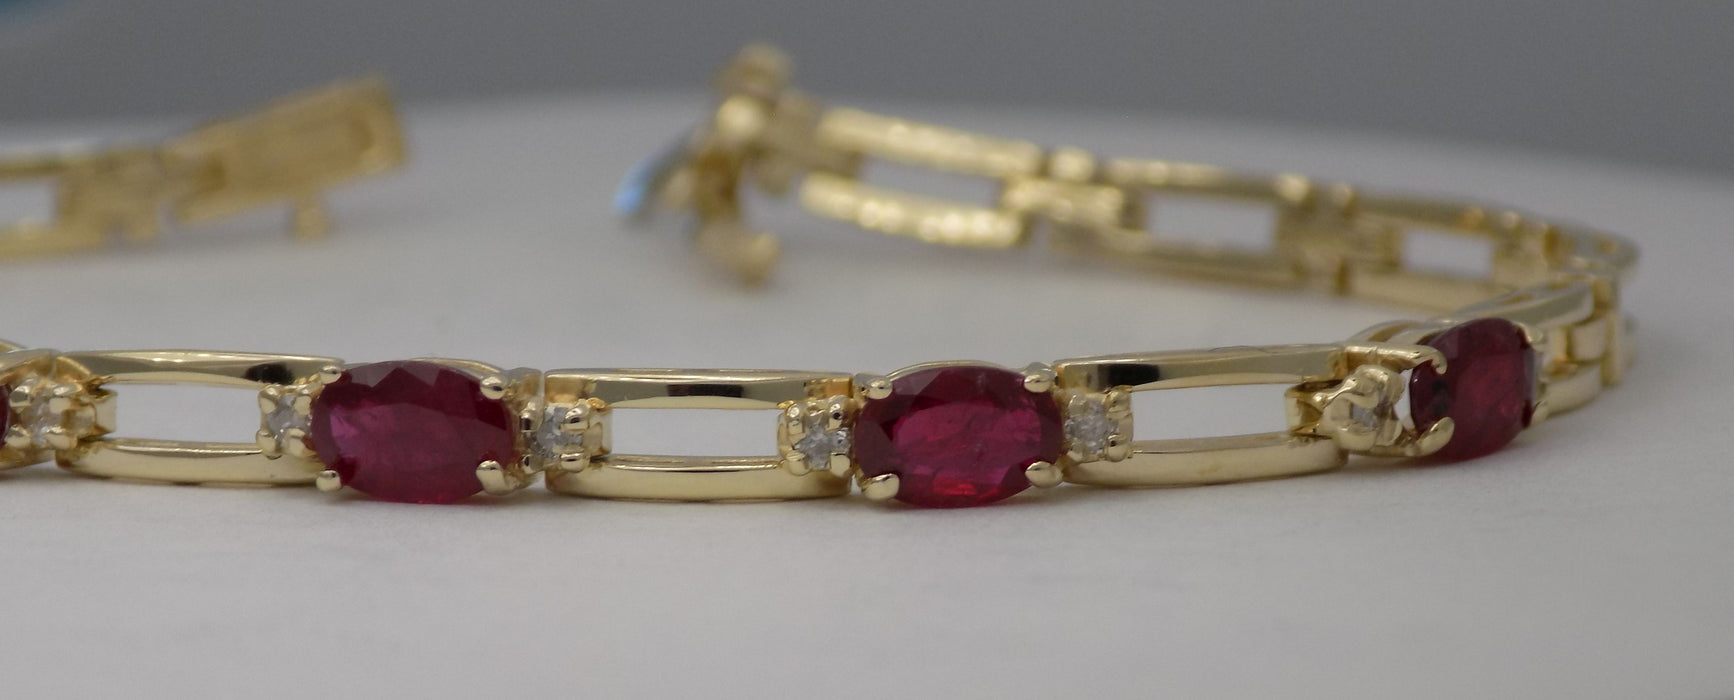 Buy Dainty Natural Red Ruby Bracelet Ruby Diamond Bracelet Ruby Online in  India - Etsy | Red ruby bracelet, Ruby bracelet, Gold jewelry fashion